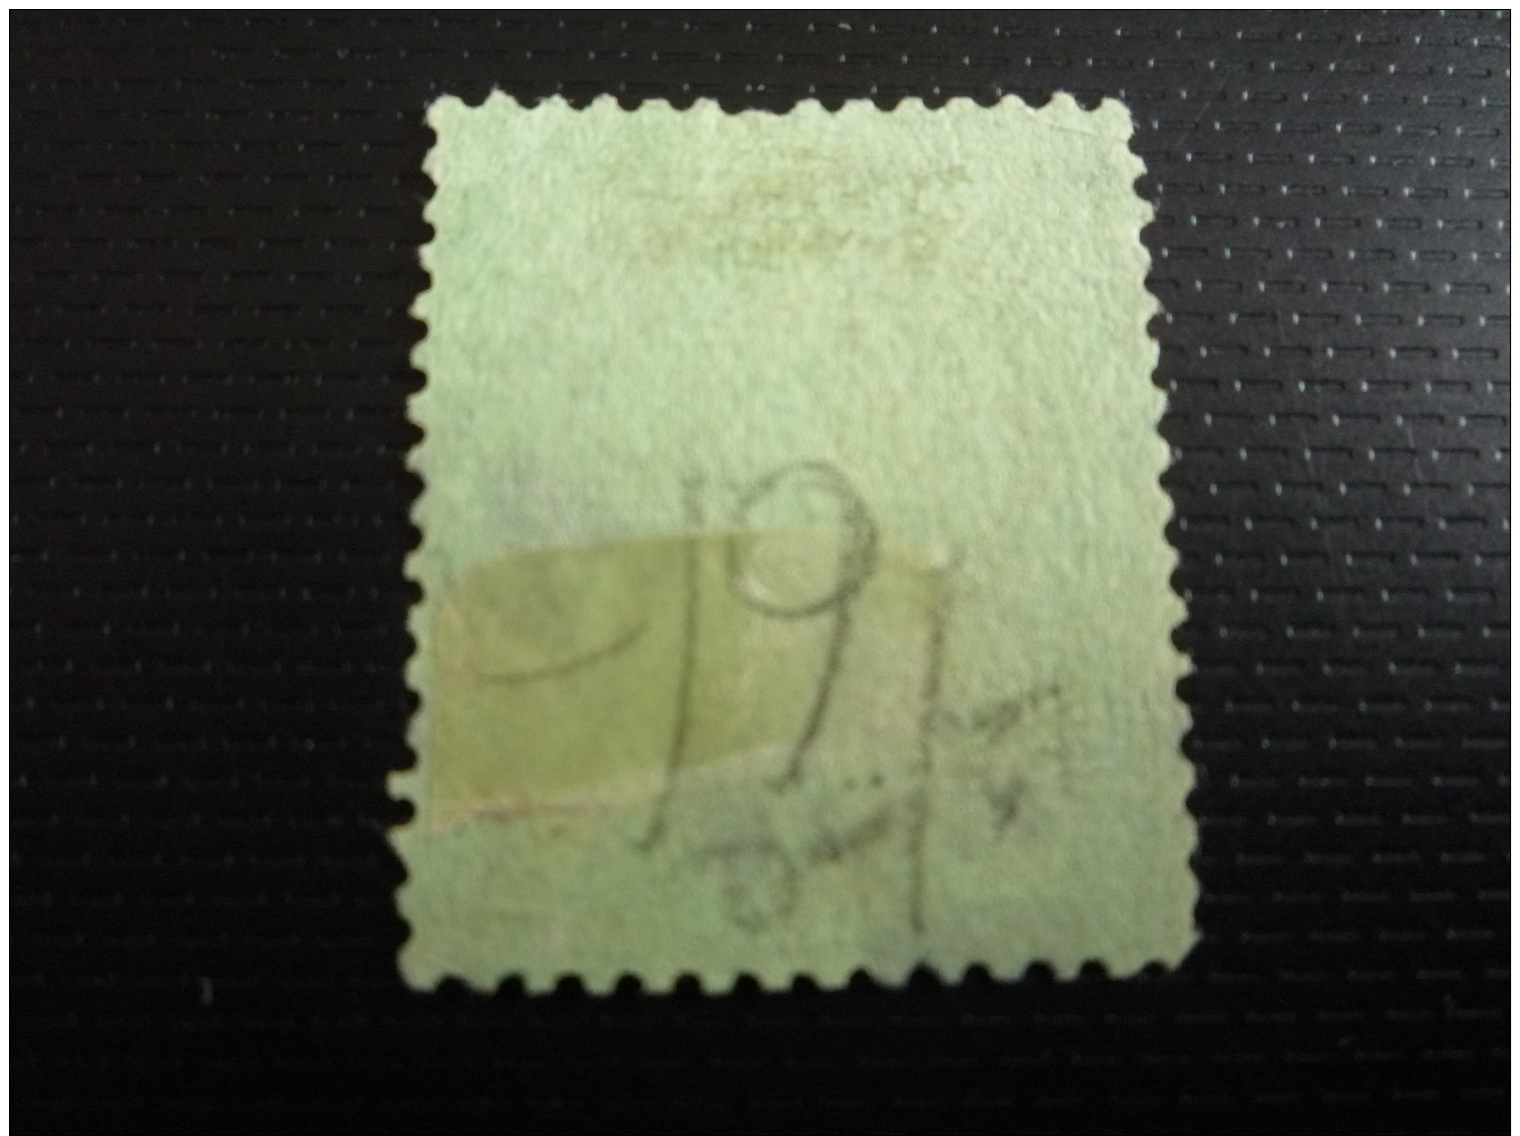 TIMBRES.N°28642.GRANDE BRETAGNE.HONG KONG.5 DOLLARS - Used Stamps